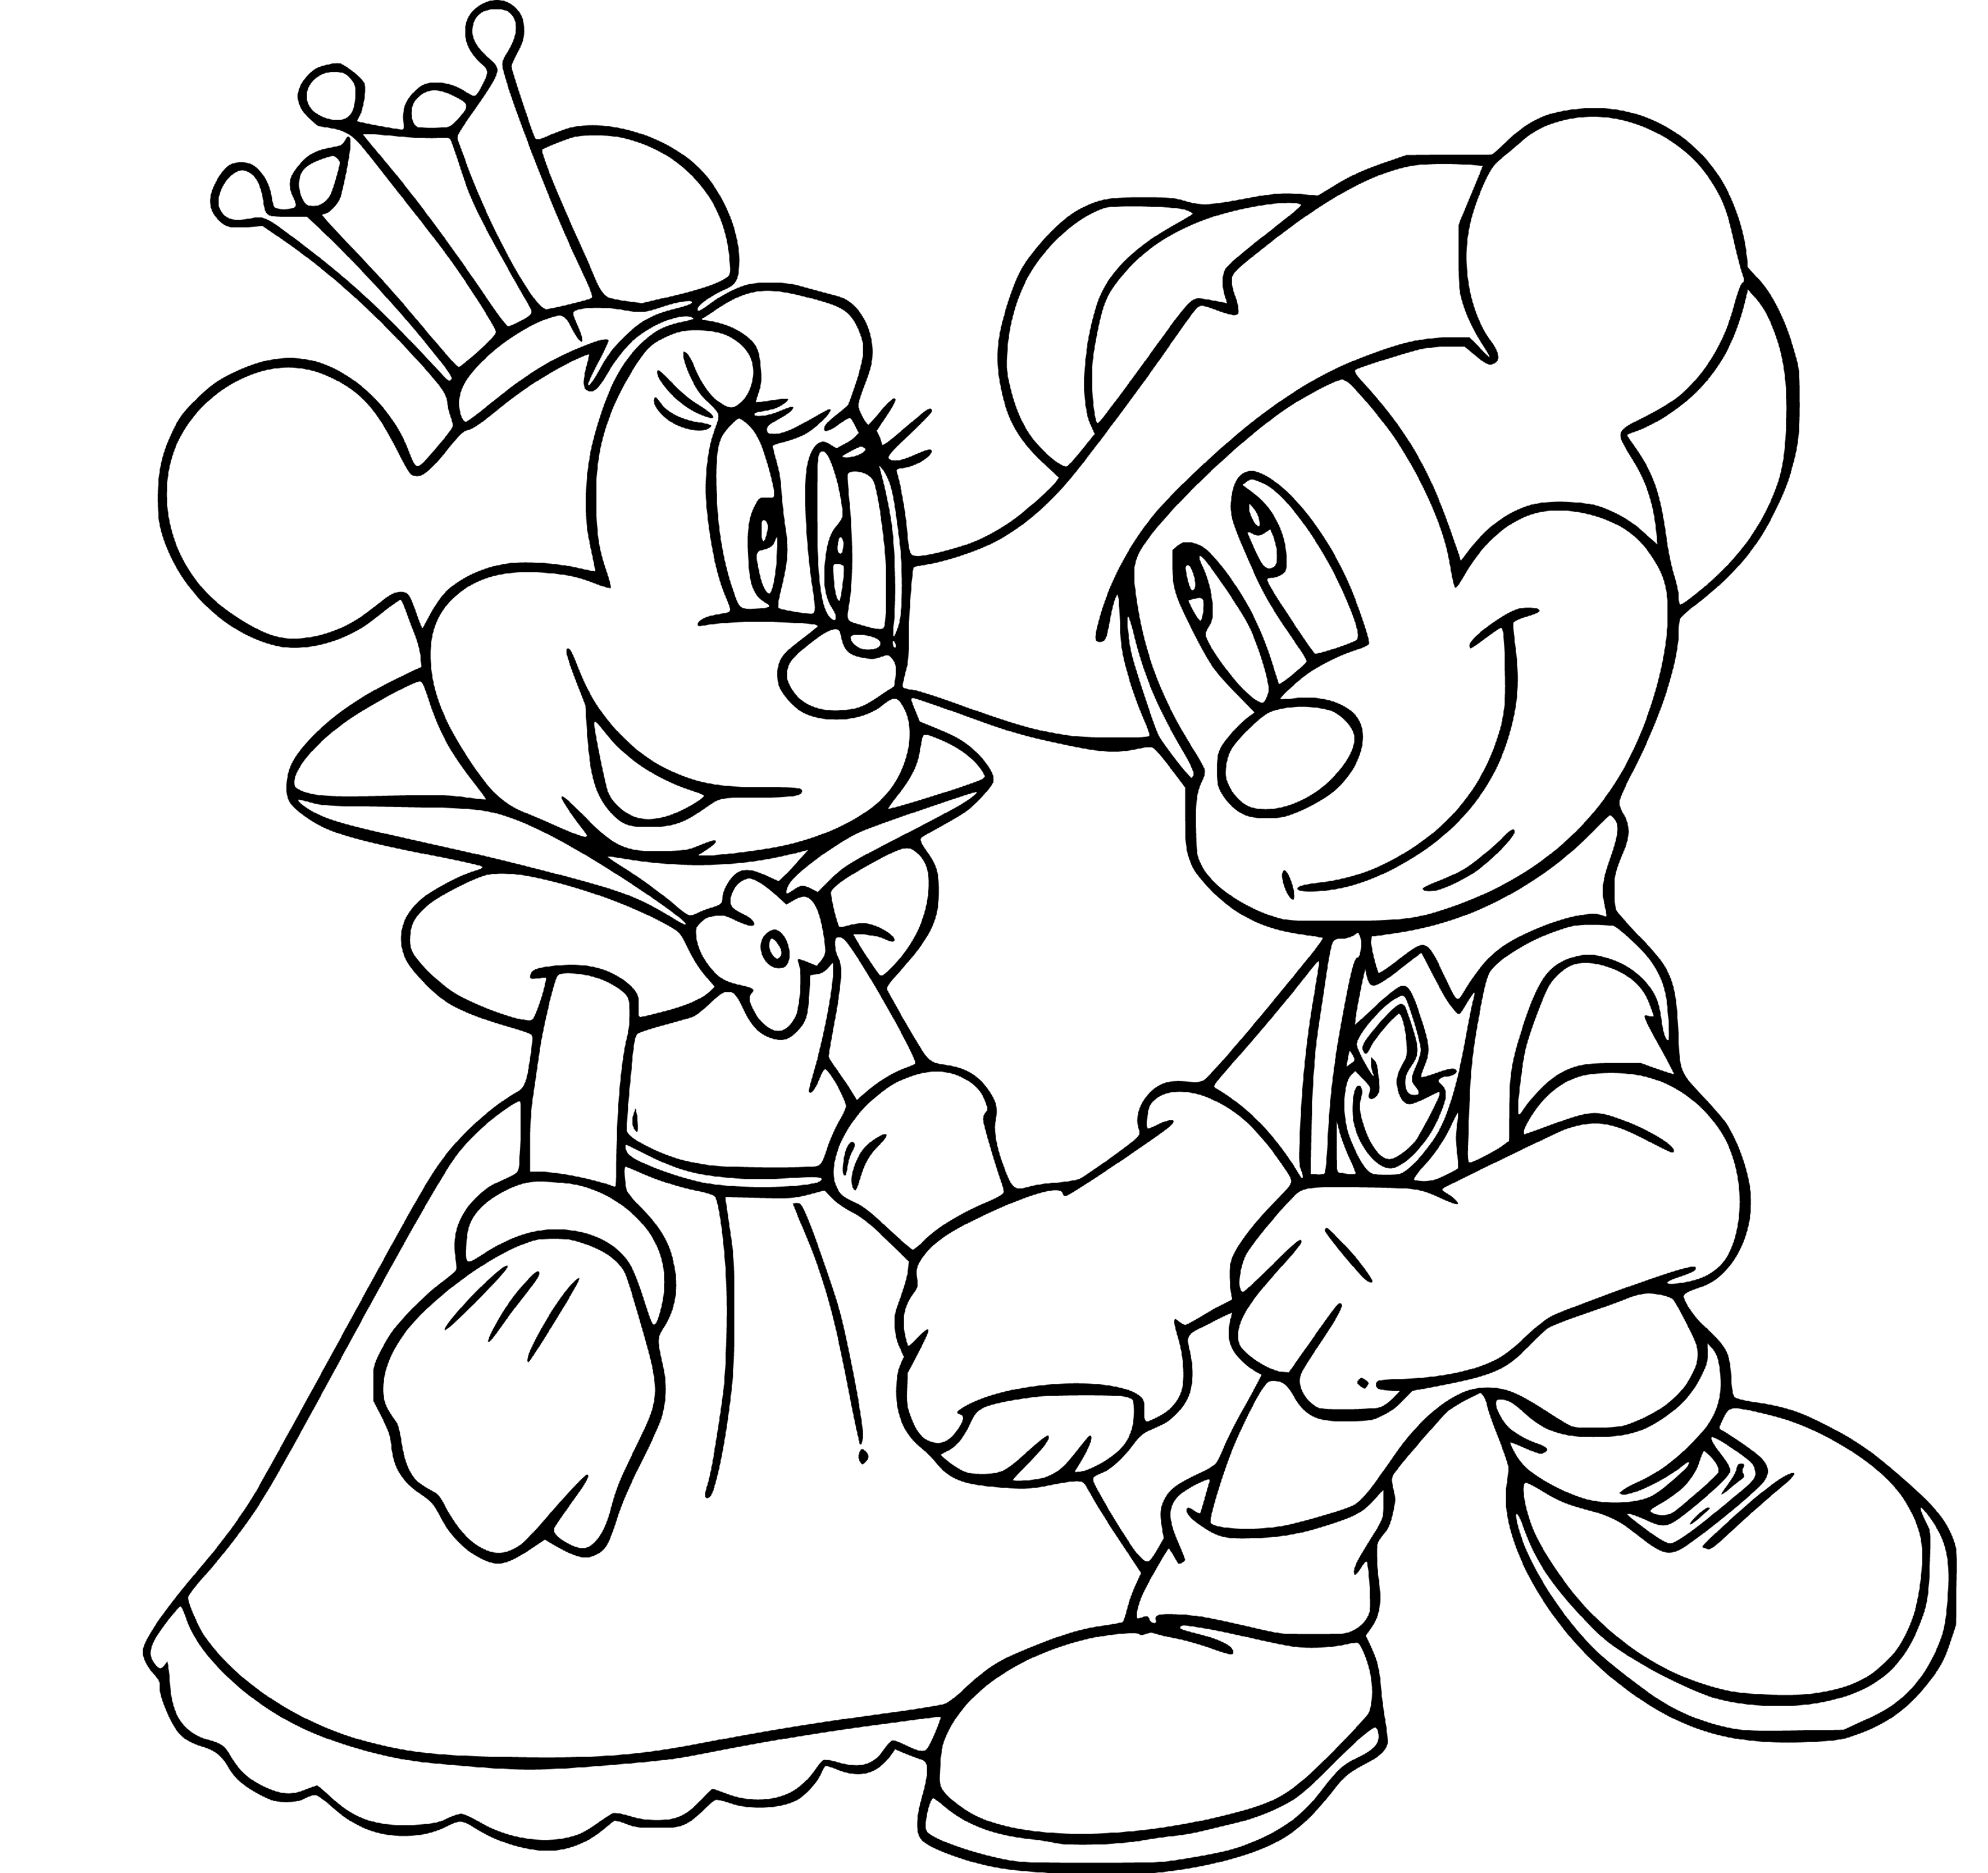 Minnie Mouse Simple Coloring Page for Children - SheetalColor.com